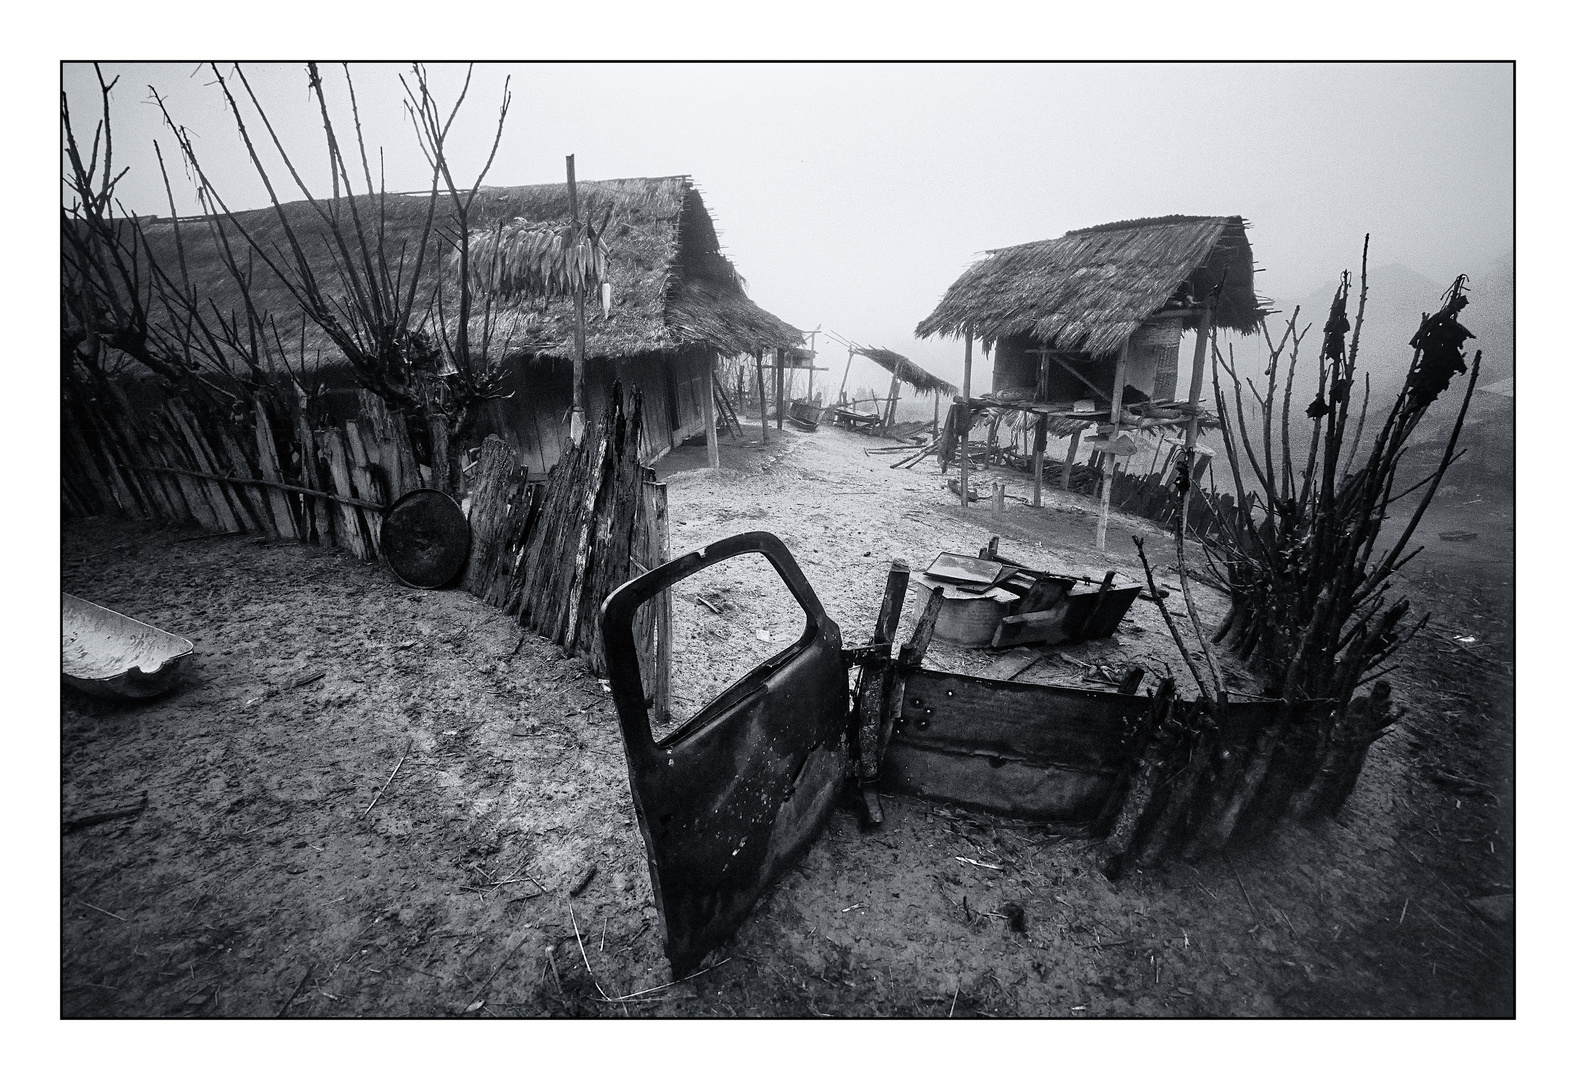 Autotüre und Bombenblindgänger. Xieng Khouang, Laos